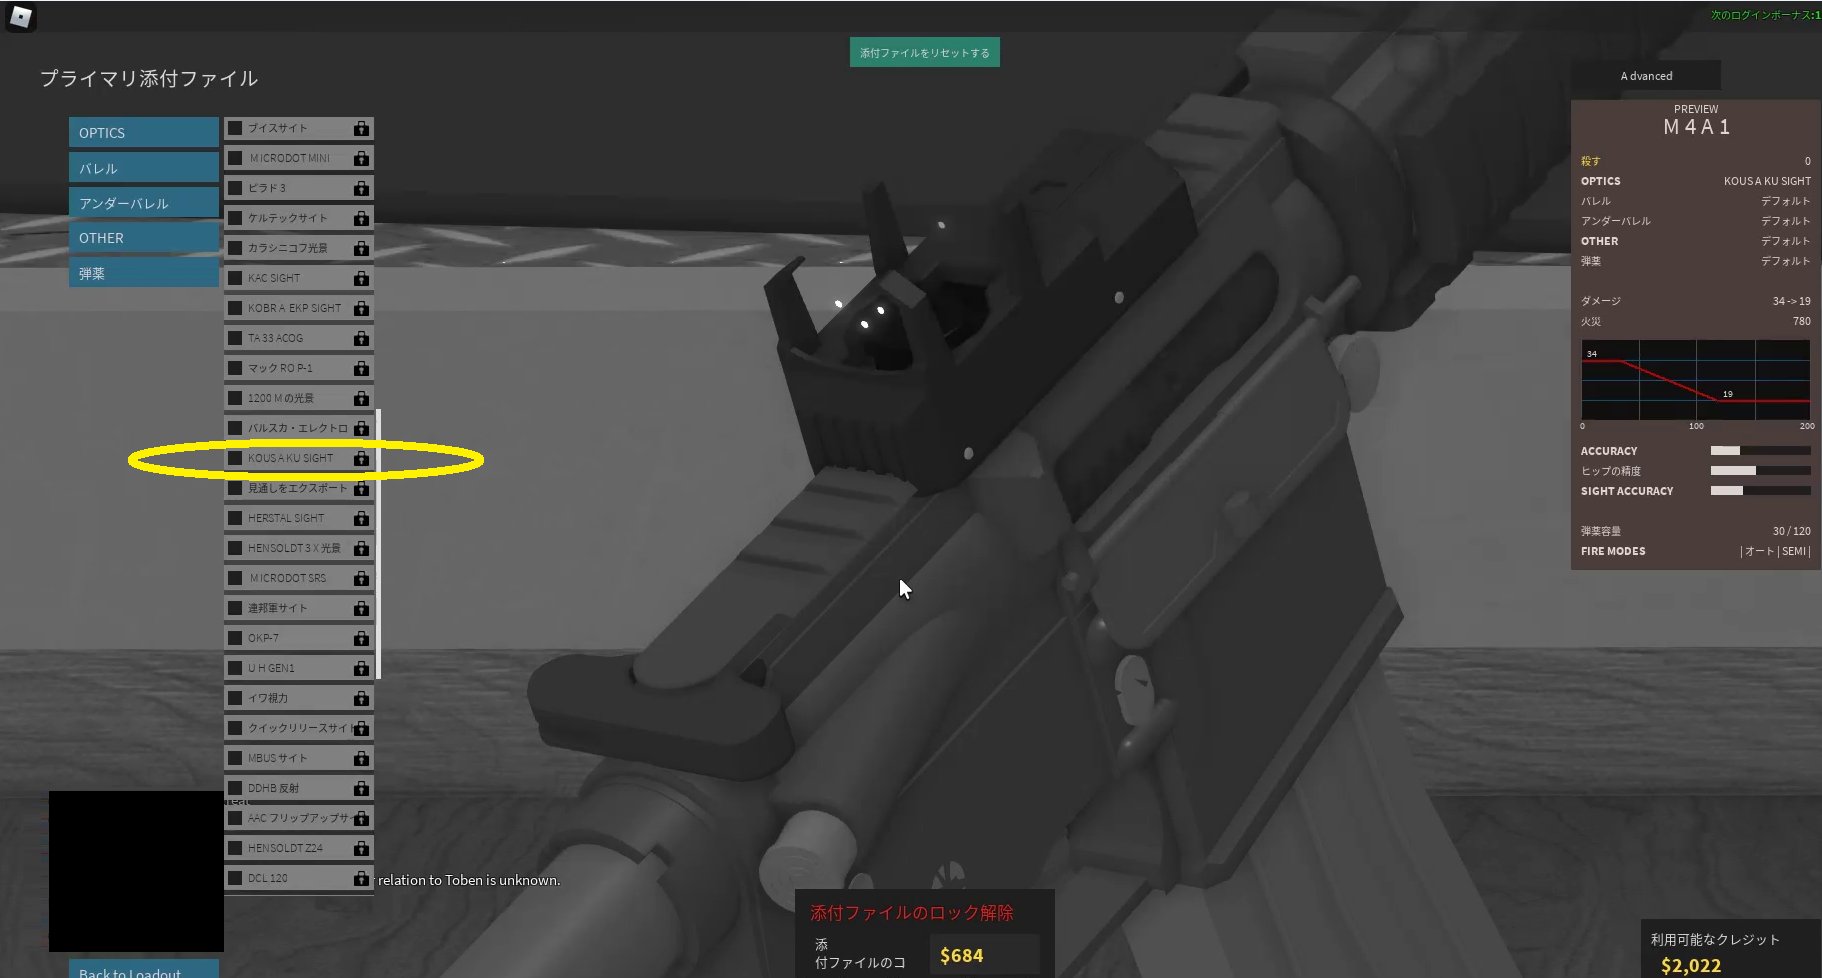 Gun Game mode confirmed? (server browser) : r/PhantomForces